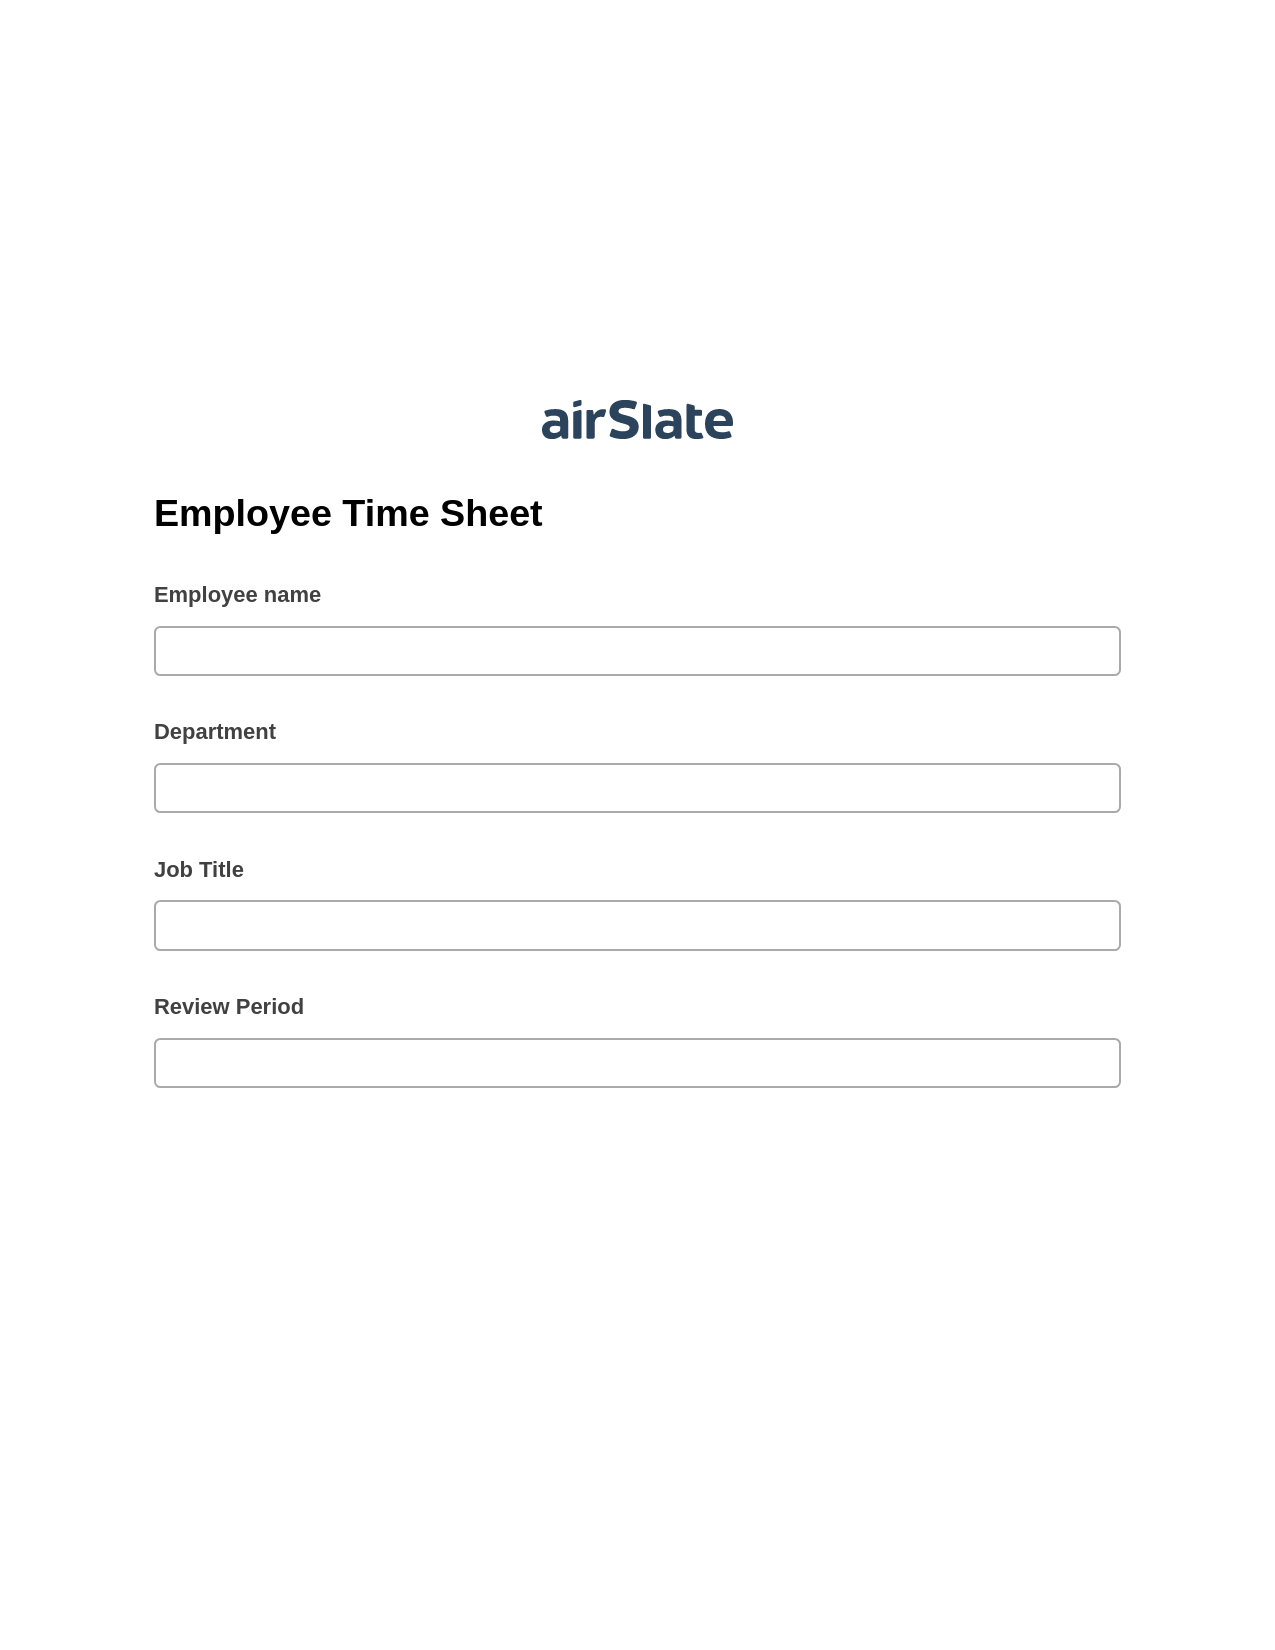 Employee Time Sheet Pre-fill from MySQL Bot, Create Slate every Google Sheet Update Bot, Archive to Google Drive Bot